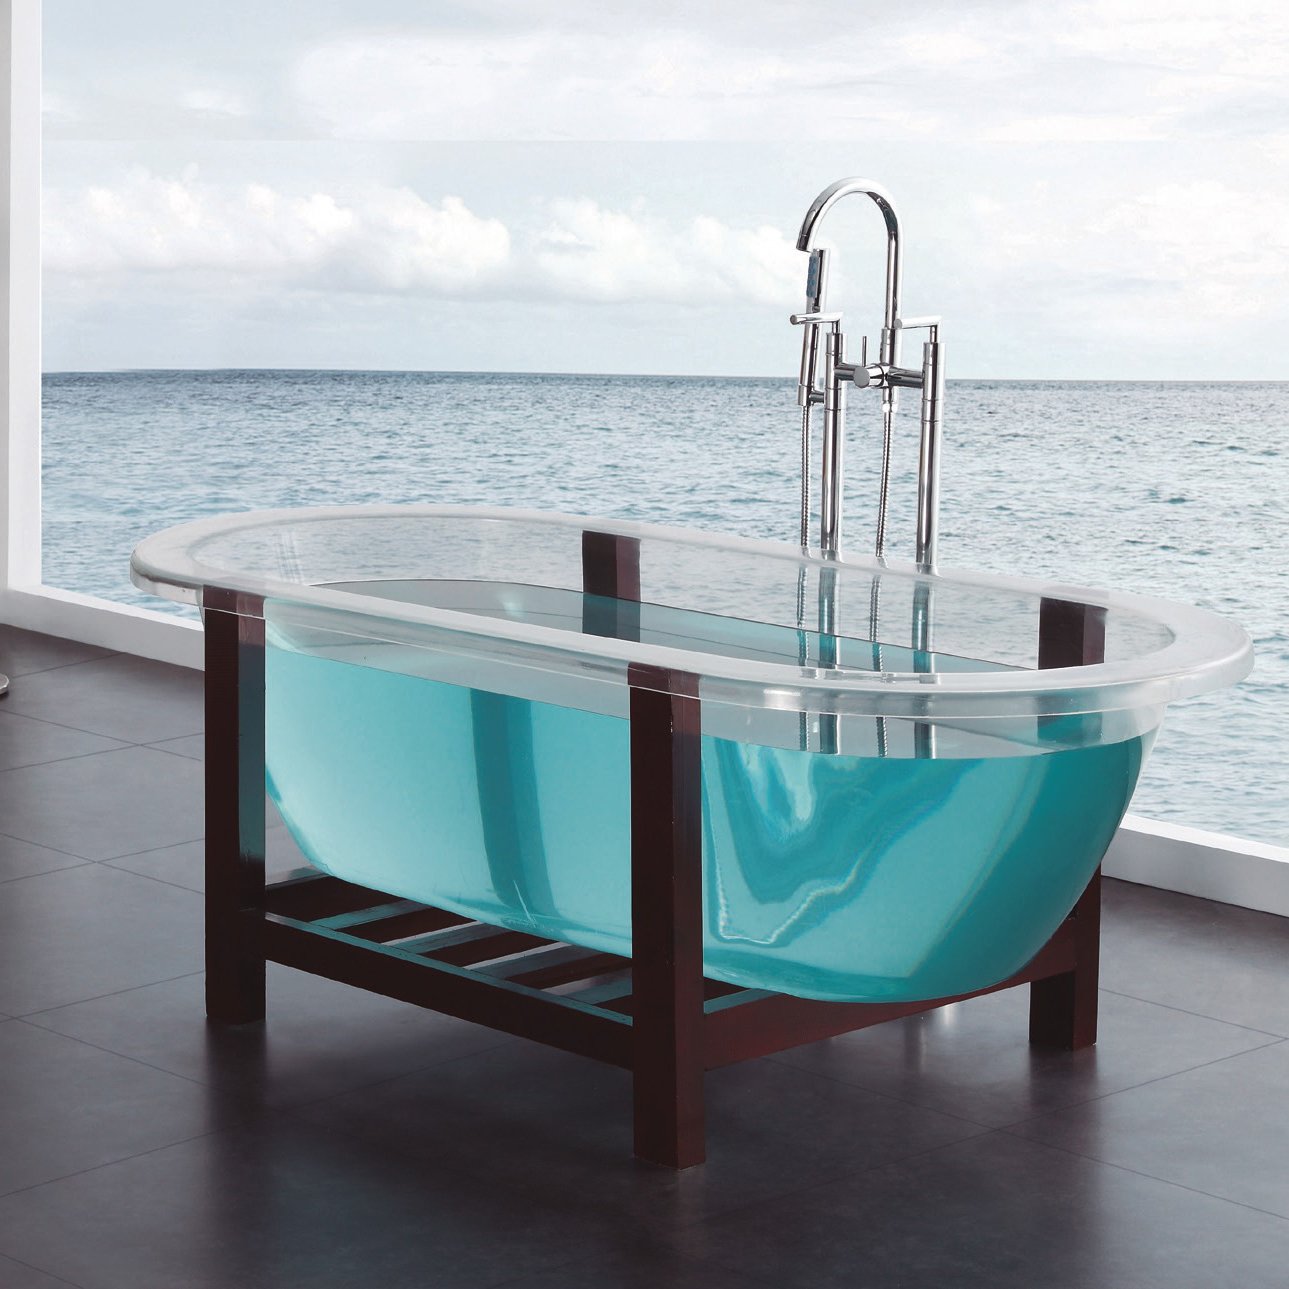 Стеклянная ванна цены. Ванна Hoesch Michael Graves 6154 акрил. Ванна Glass Design Paradiso Bathtub. Стеклянная ванна прозрачная. Ванная прозрачная отдельностоящая.